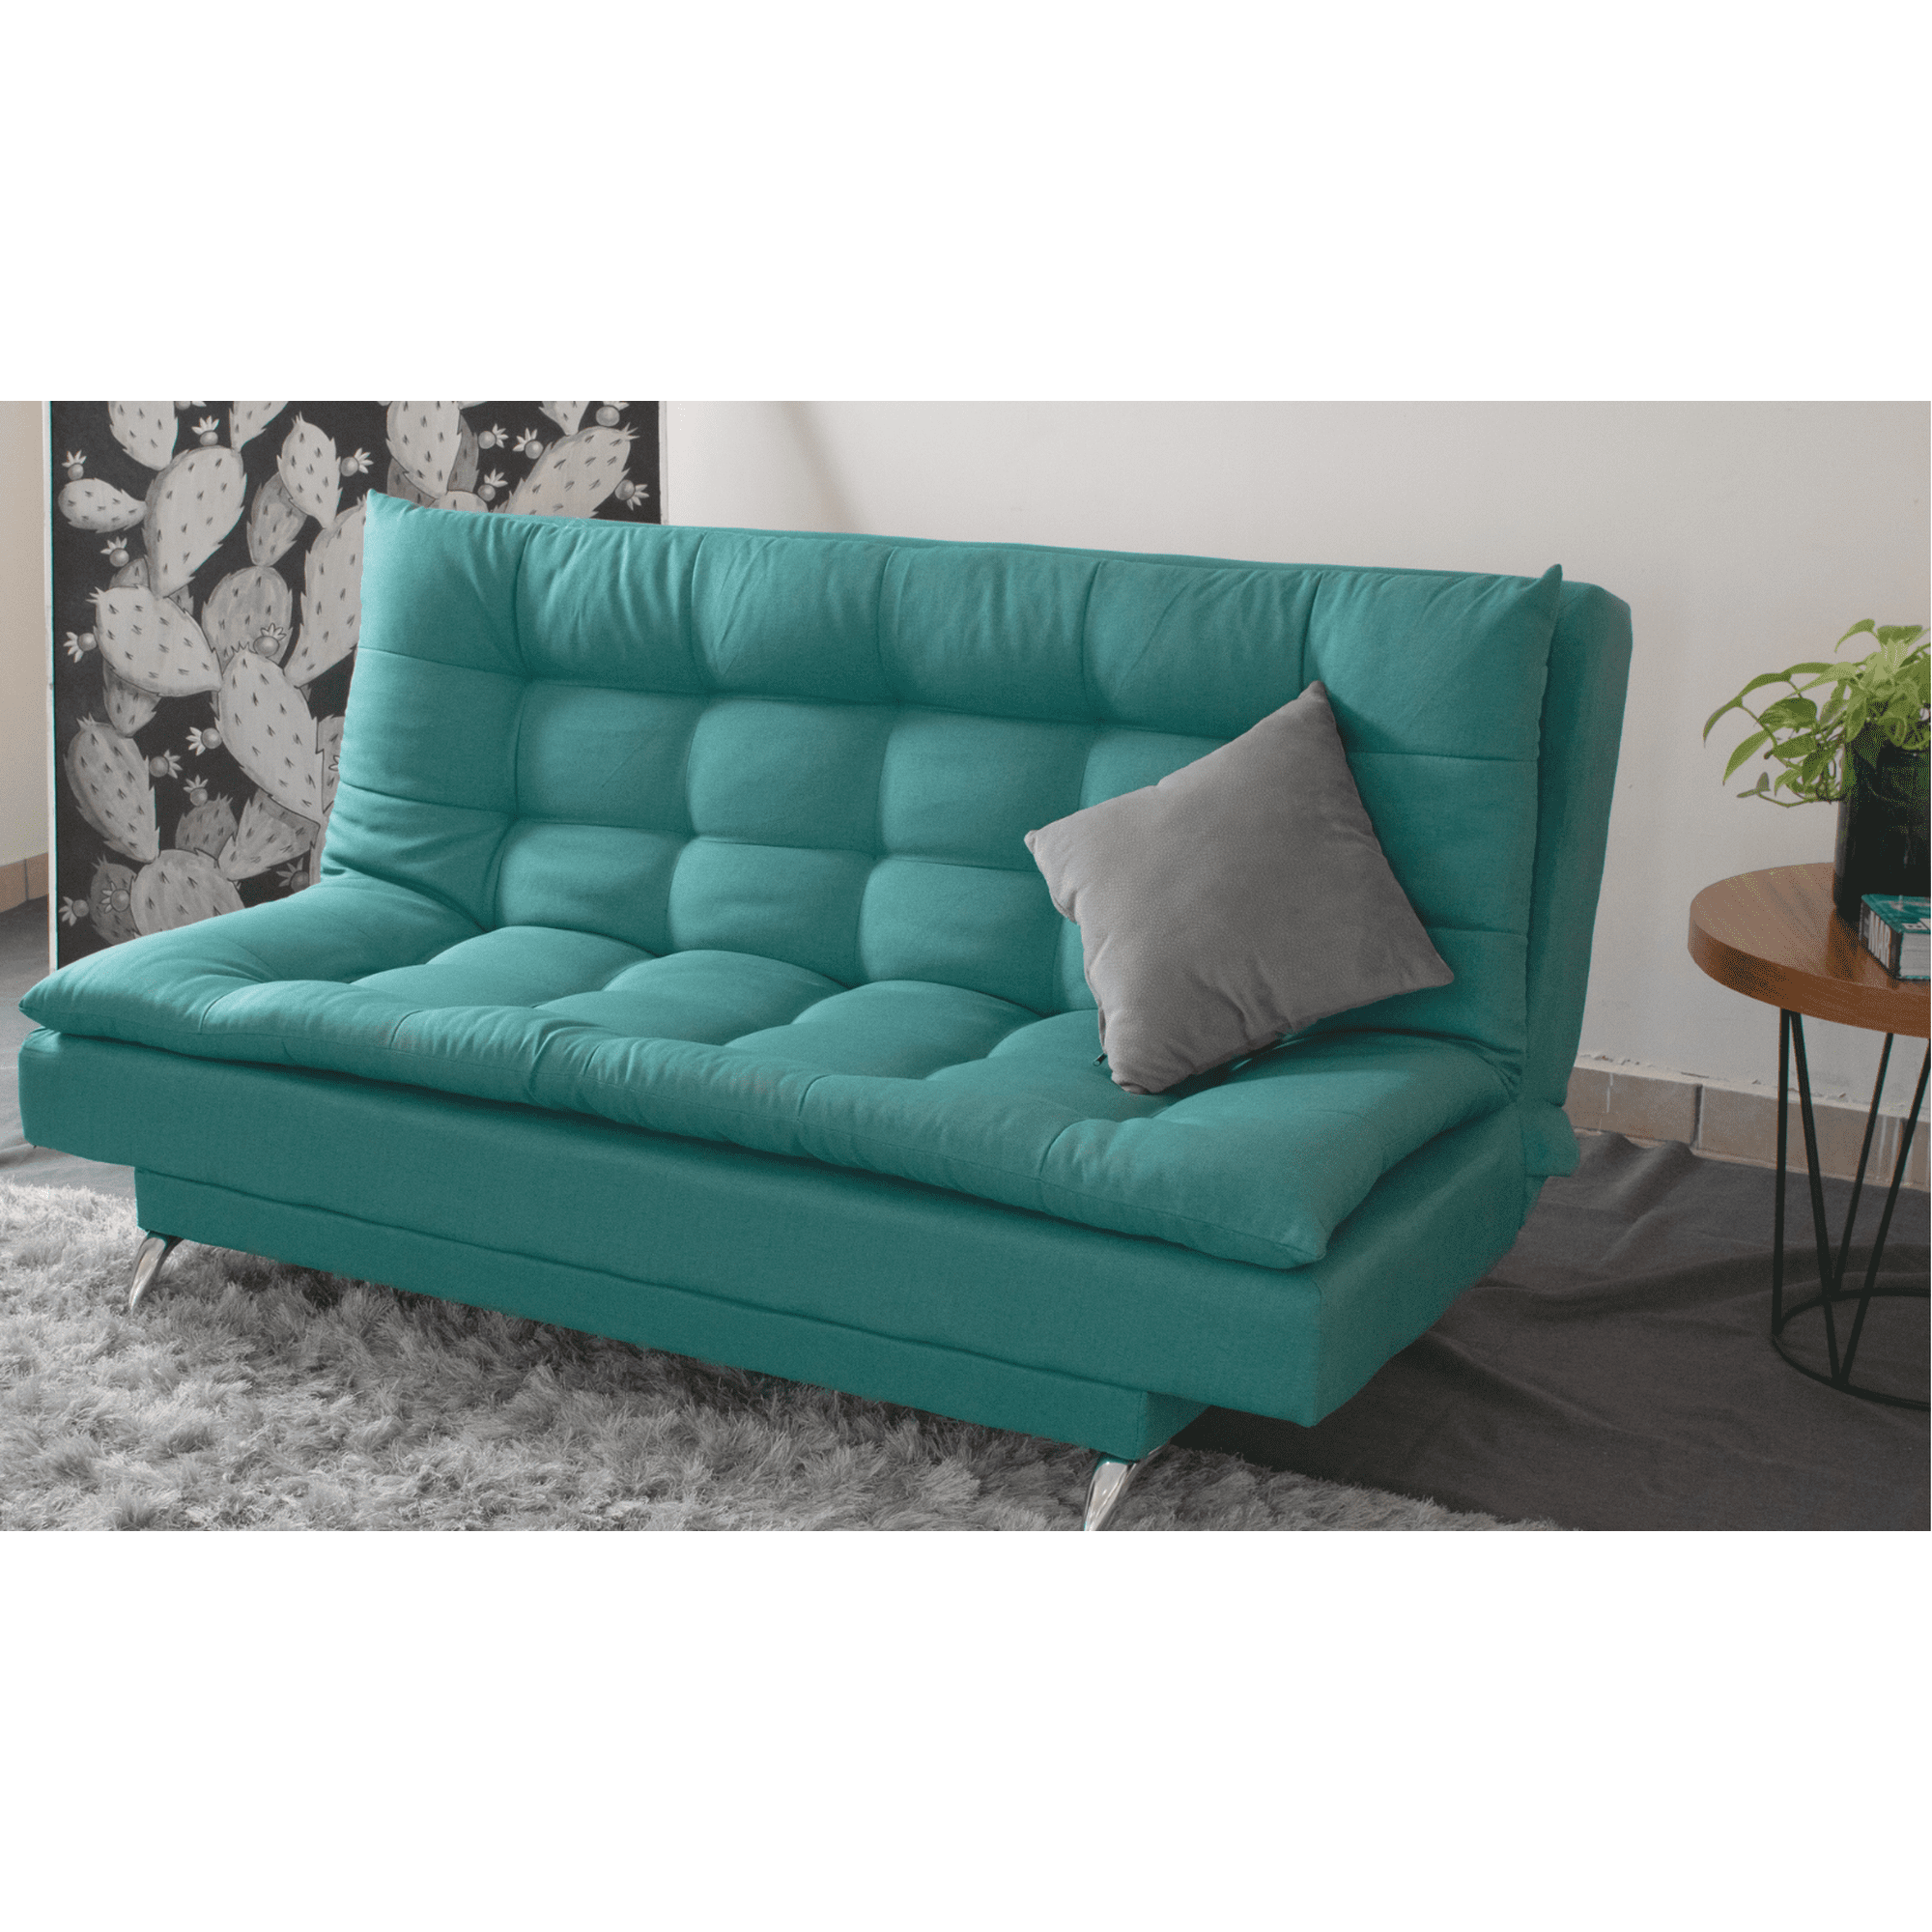 DIVAN CAMA - Comprar en Arte sofa